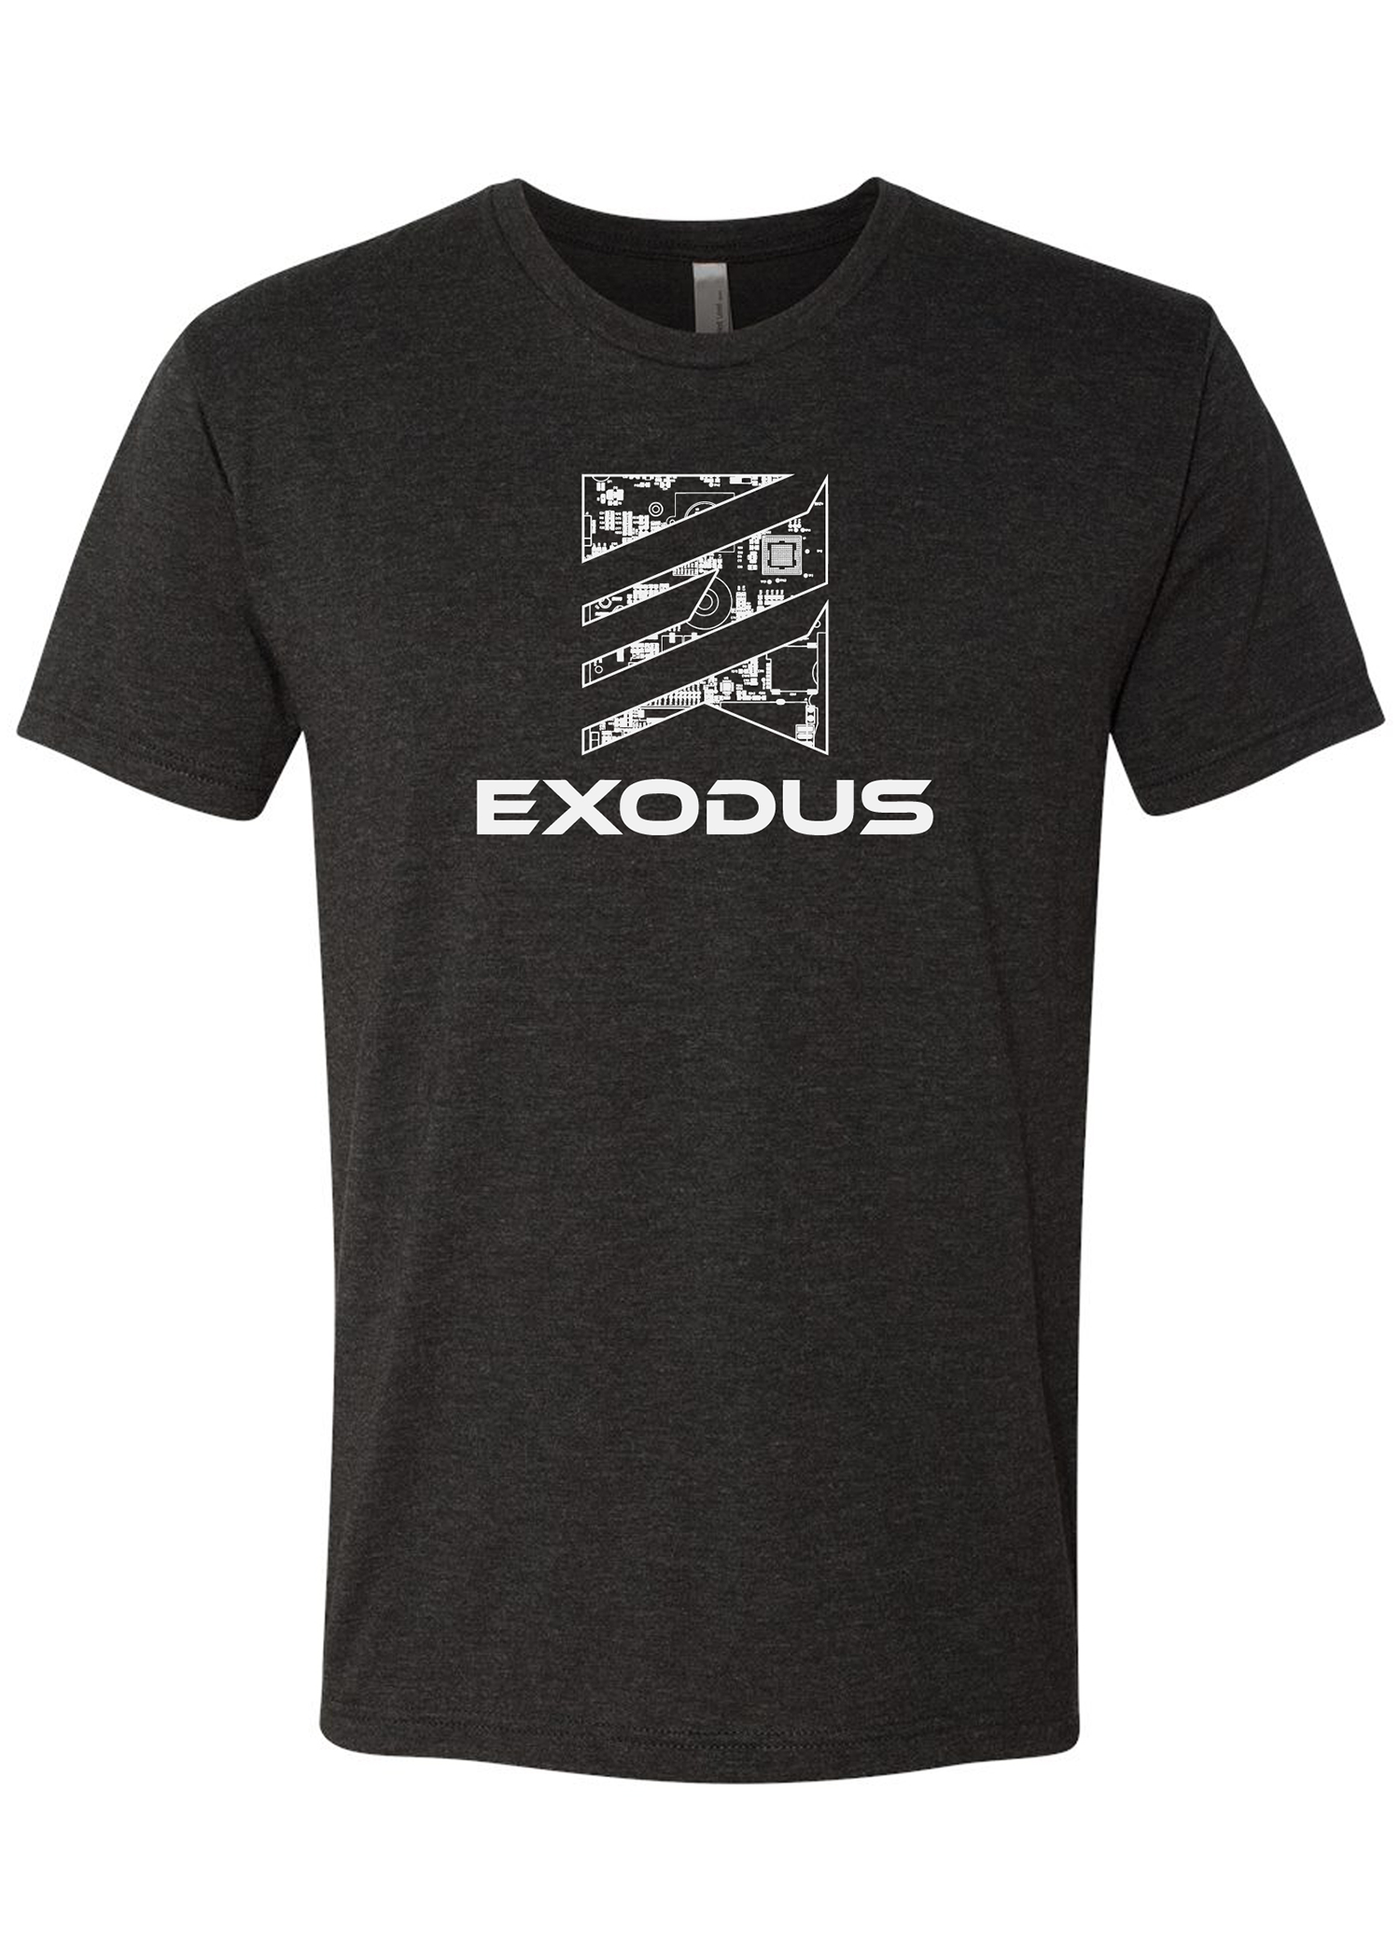 Exodus Motherboard T-Shirt